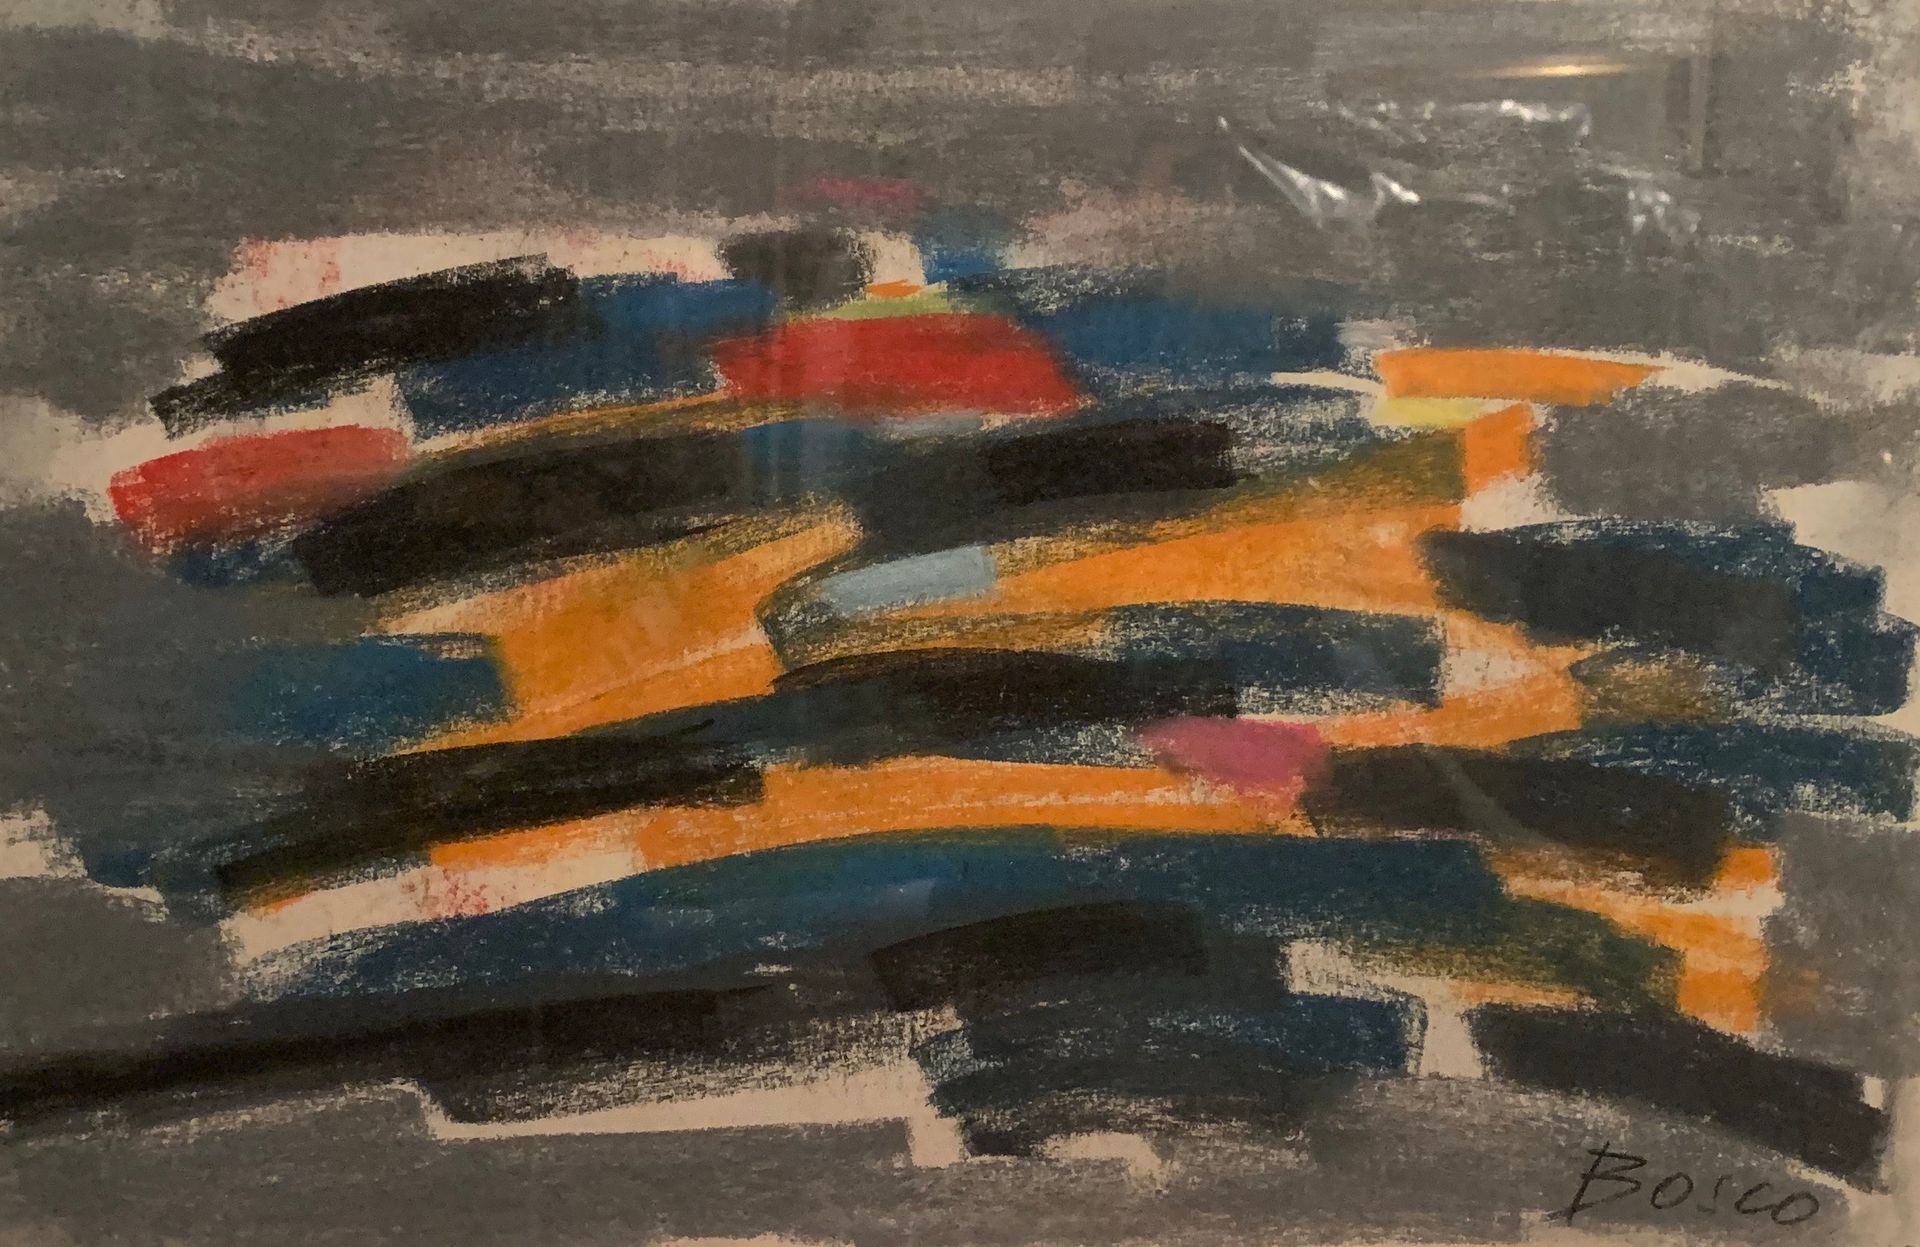 Null 皮埃尔-博斯克 (1909-1993)

彩色抽象画

布面油画，右下角有签名

27 x 41 厘米